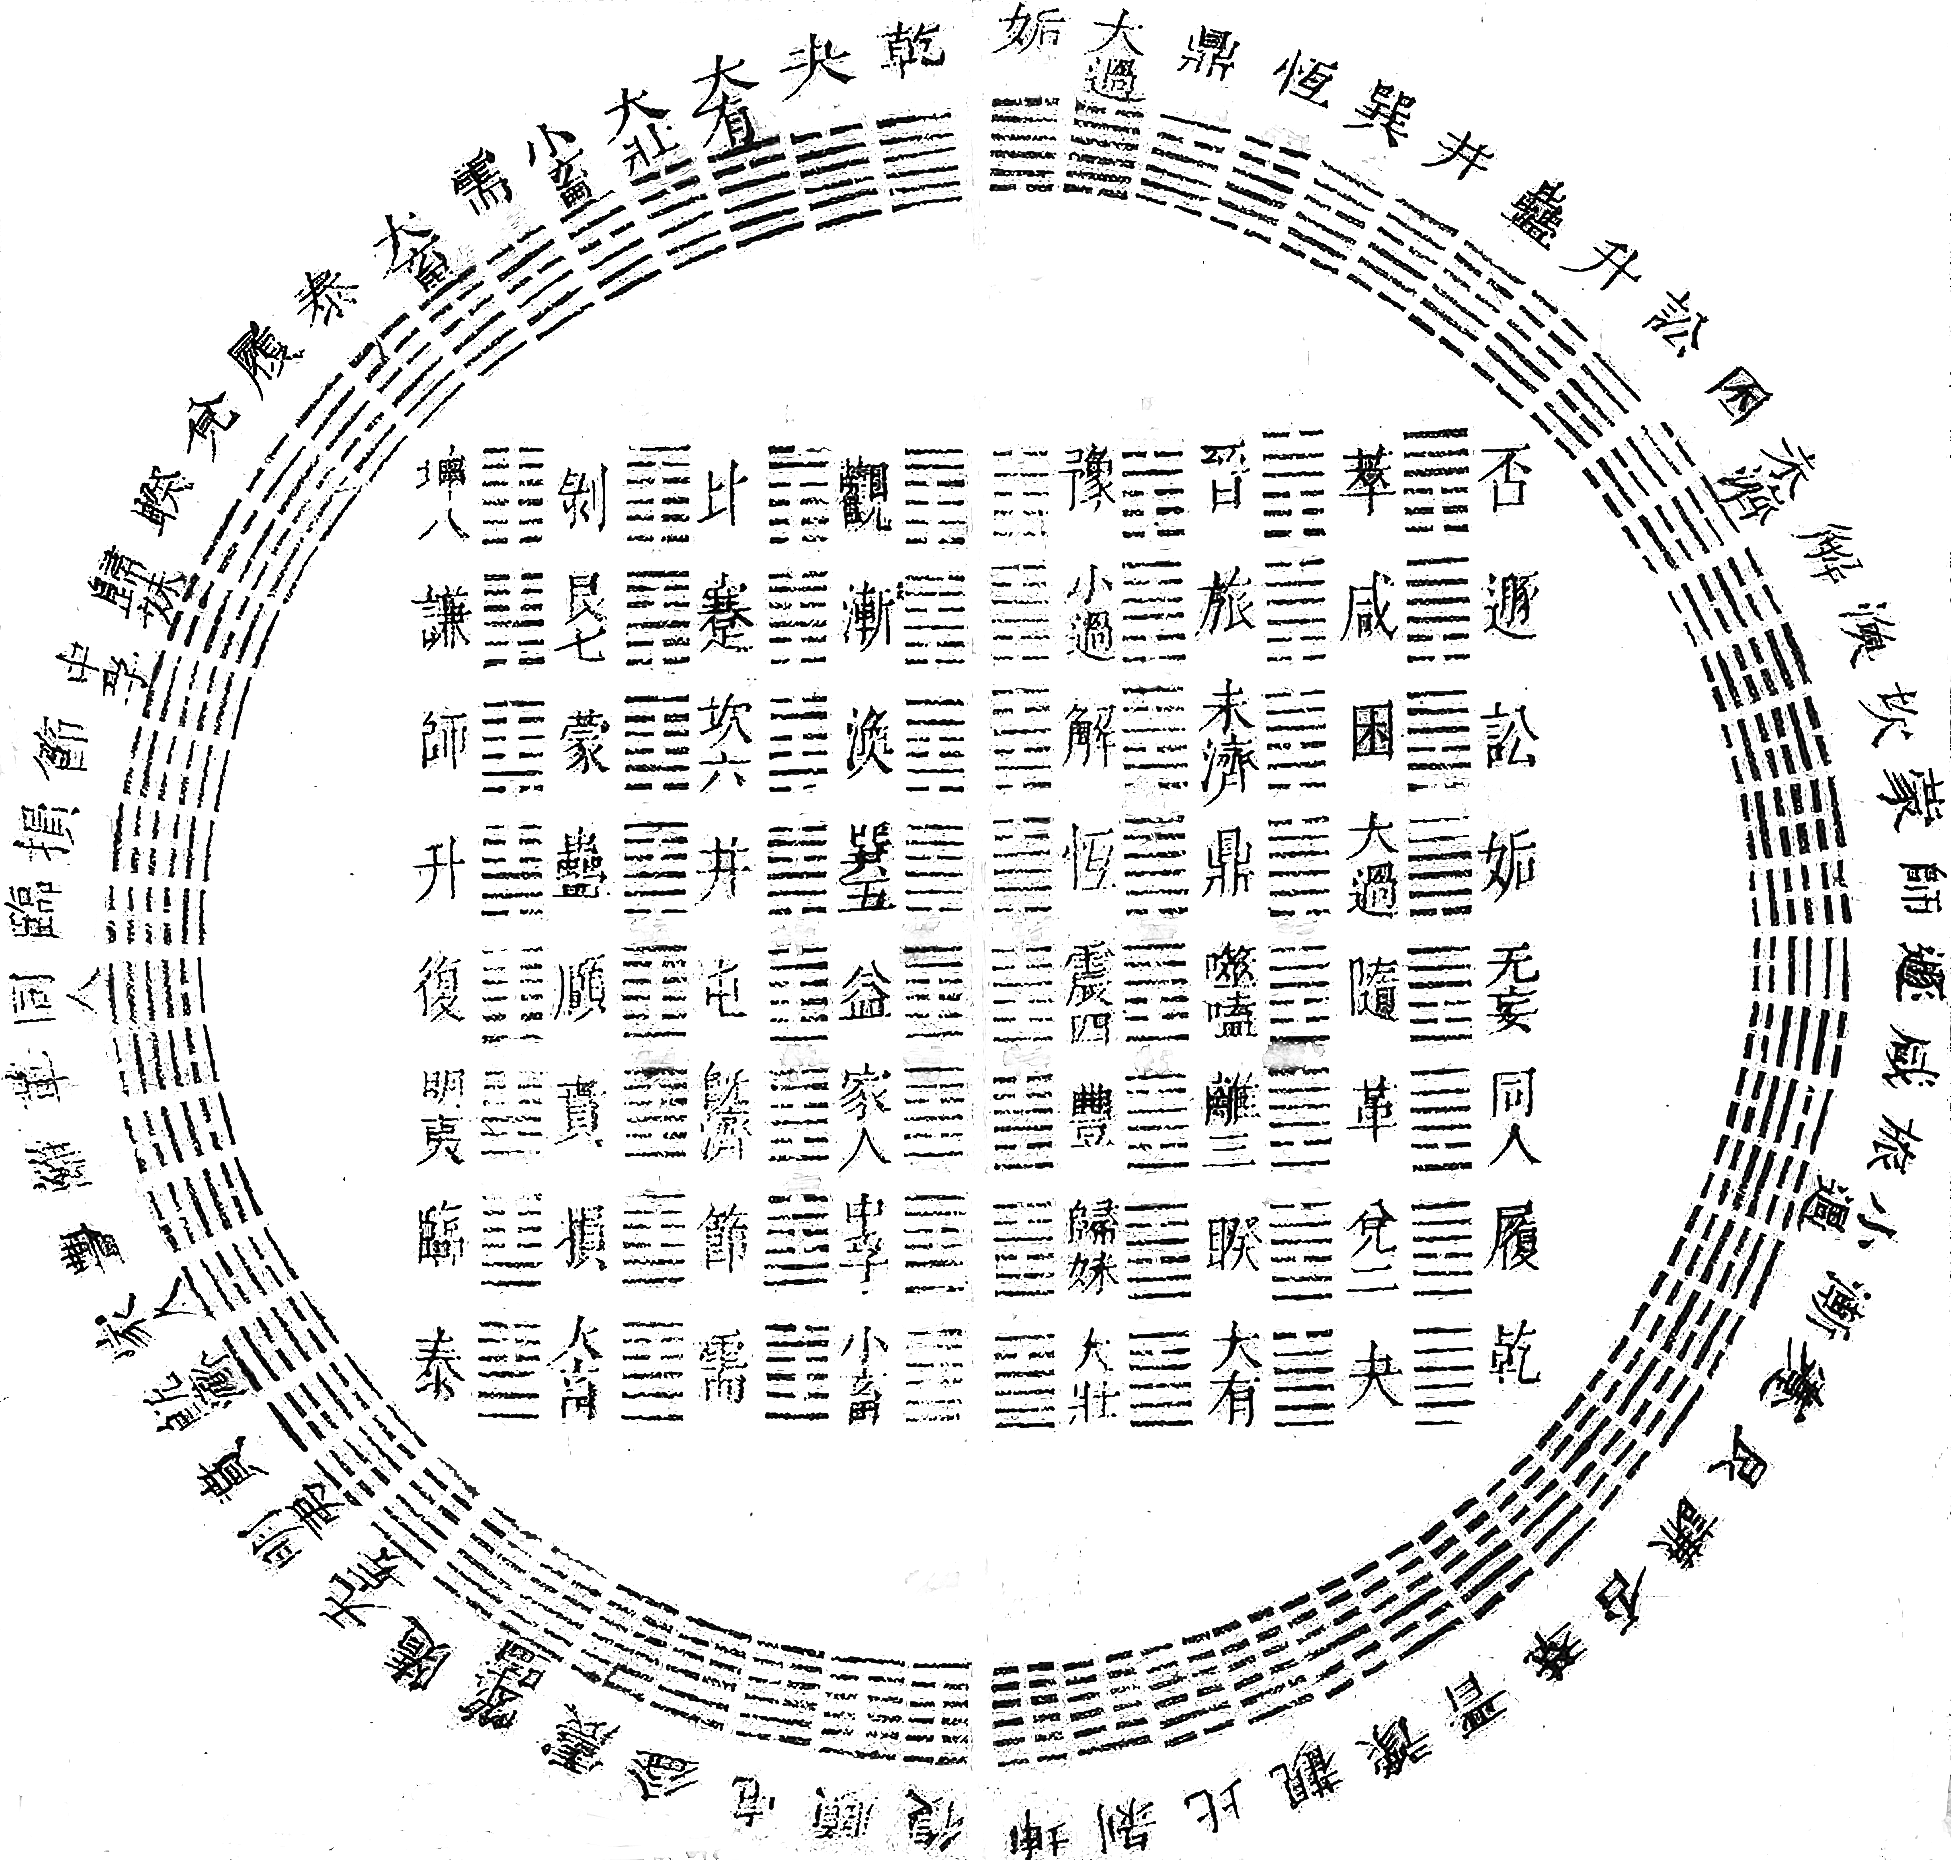 Shao Yung circle of hexagrams